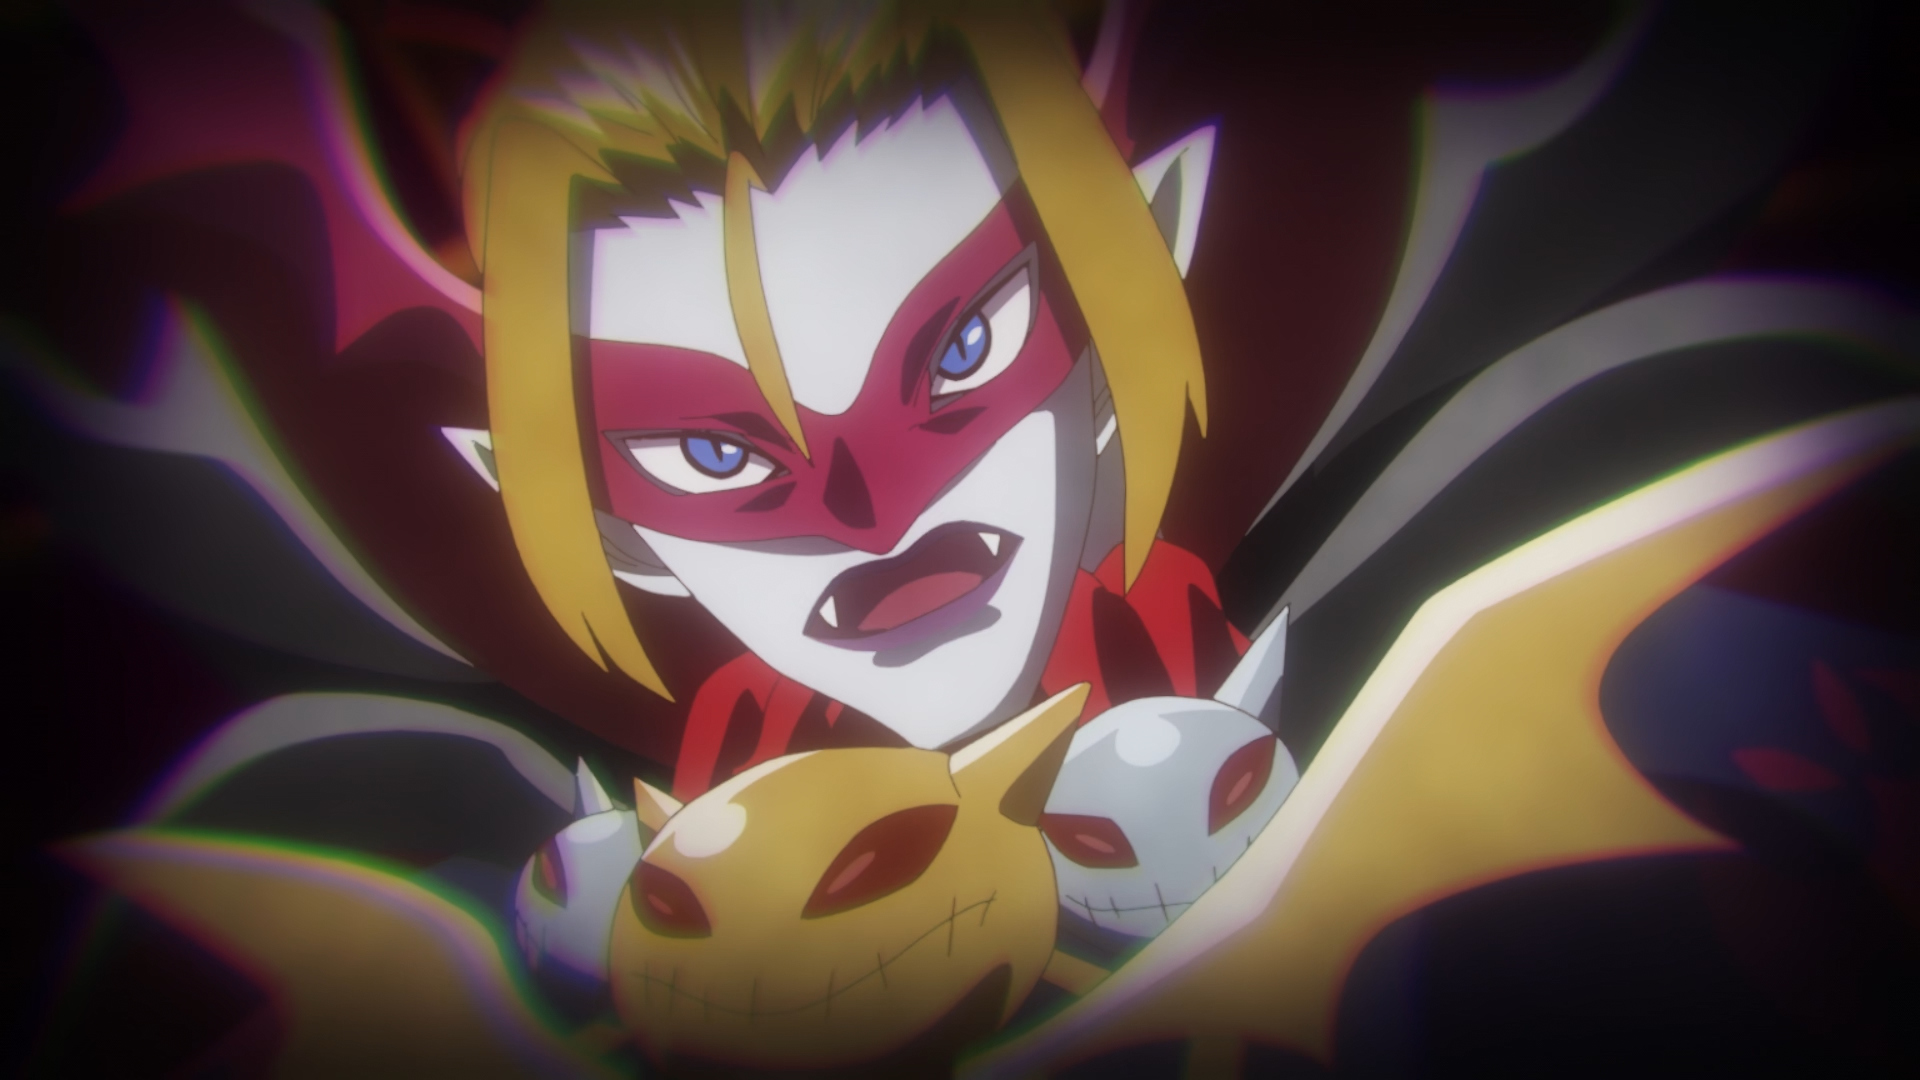 Digimon's New Female Protagonist Meets Her Partner Angoramon